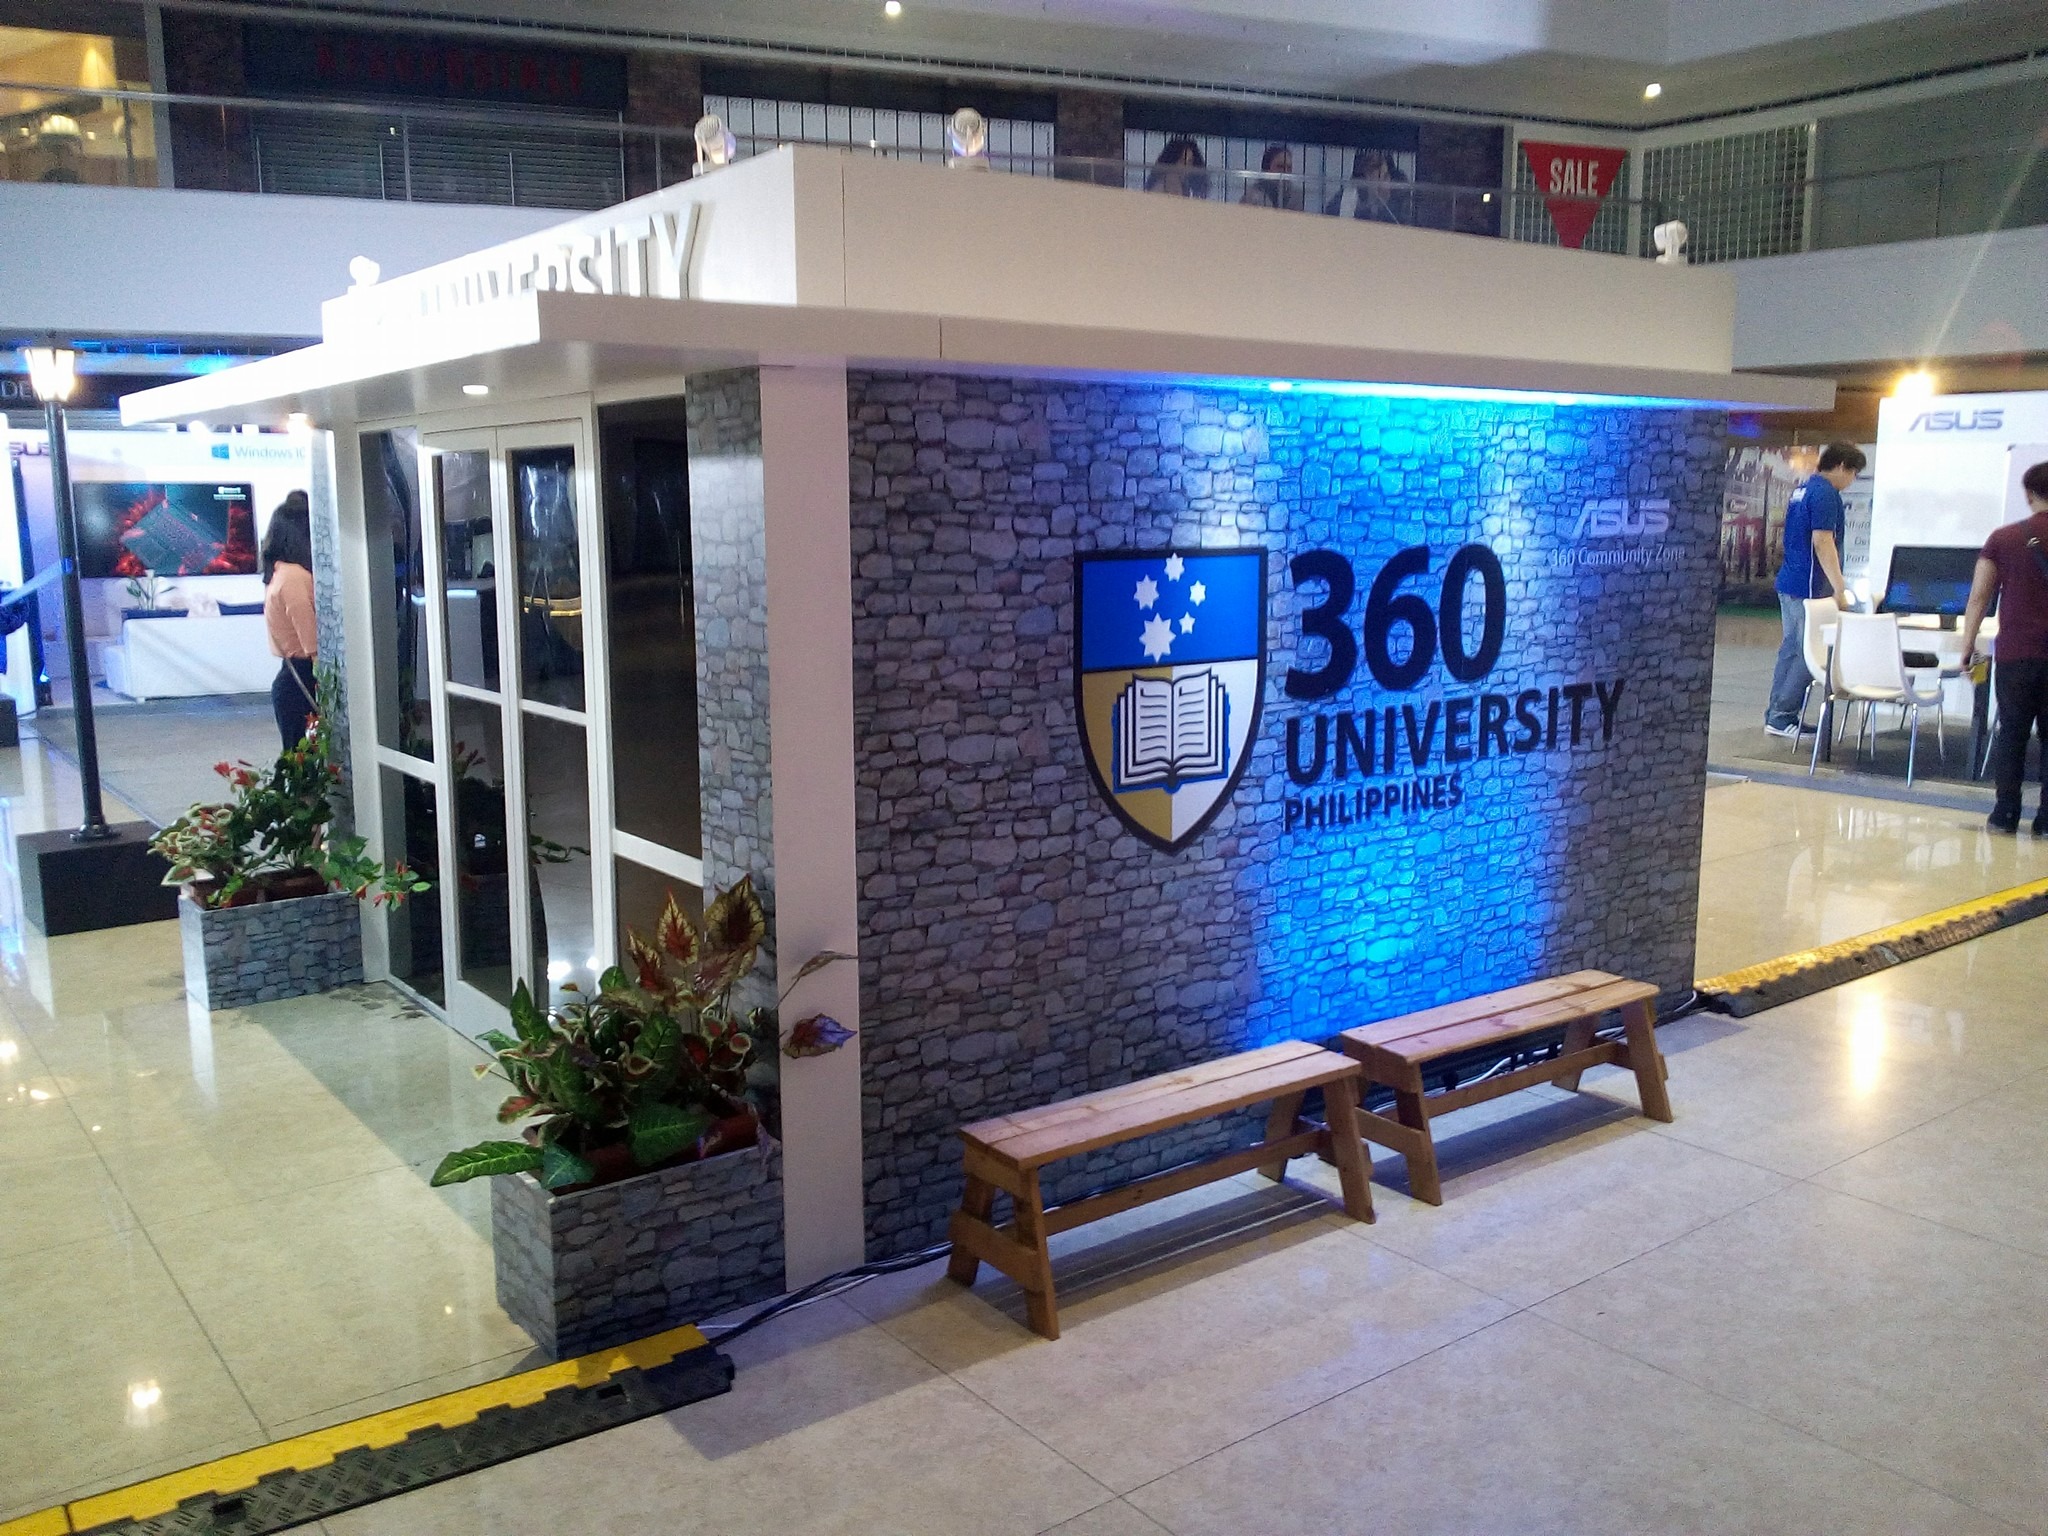 ASUS 360 University